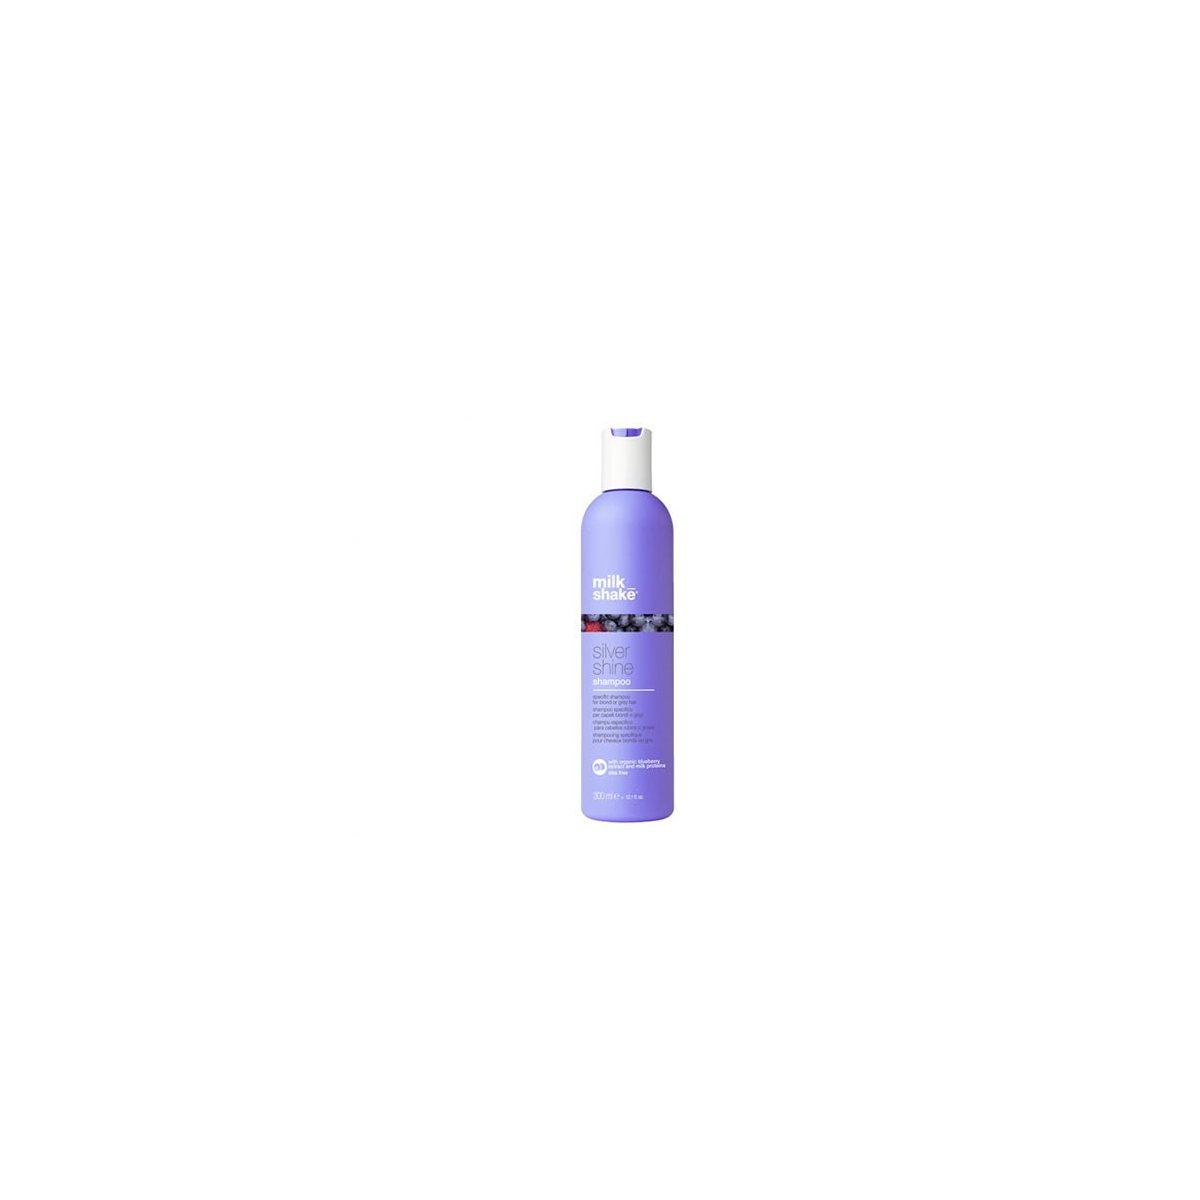 Z.ONE CONCEPT - MILK SHAKE - SILVER SHINE Shampoo (300ml) Shampoo anti giallo